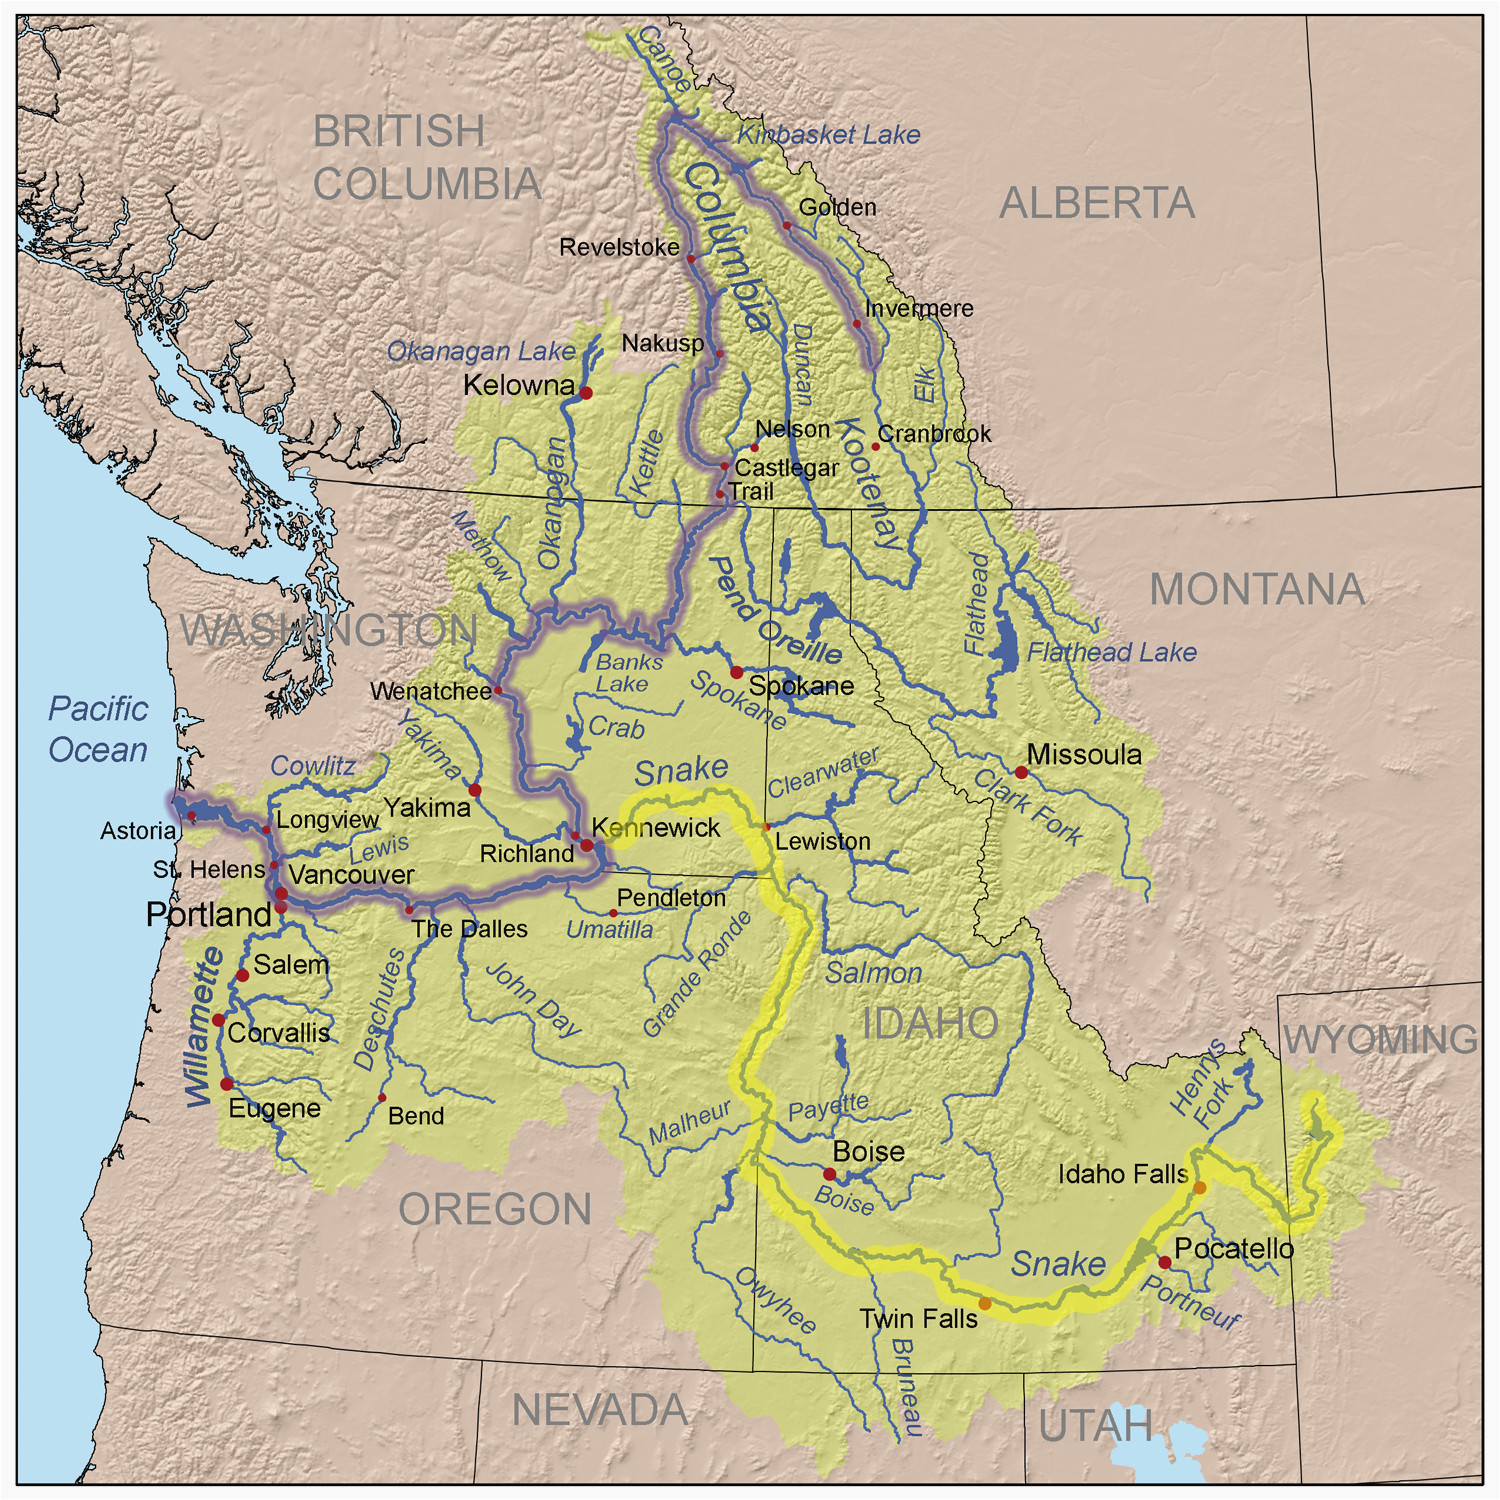 Umatilla oregon Map where is Pendleton oregon On Map Road Map Of oregon and California